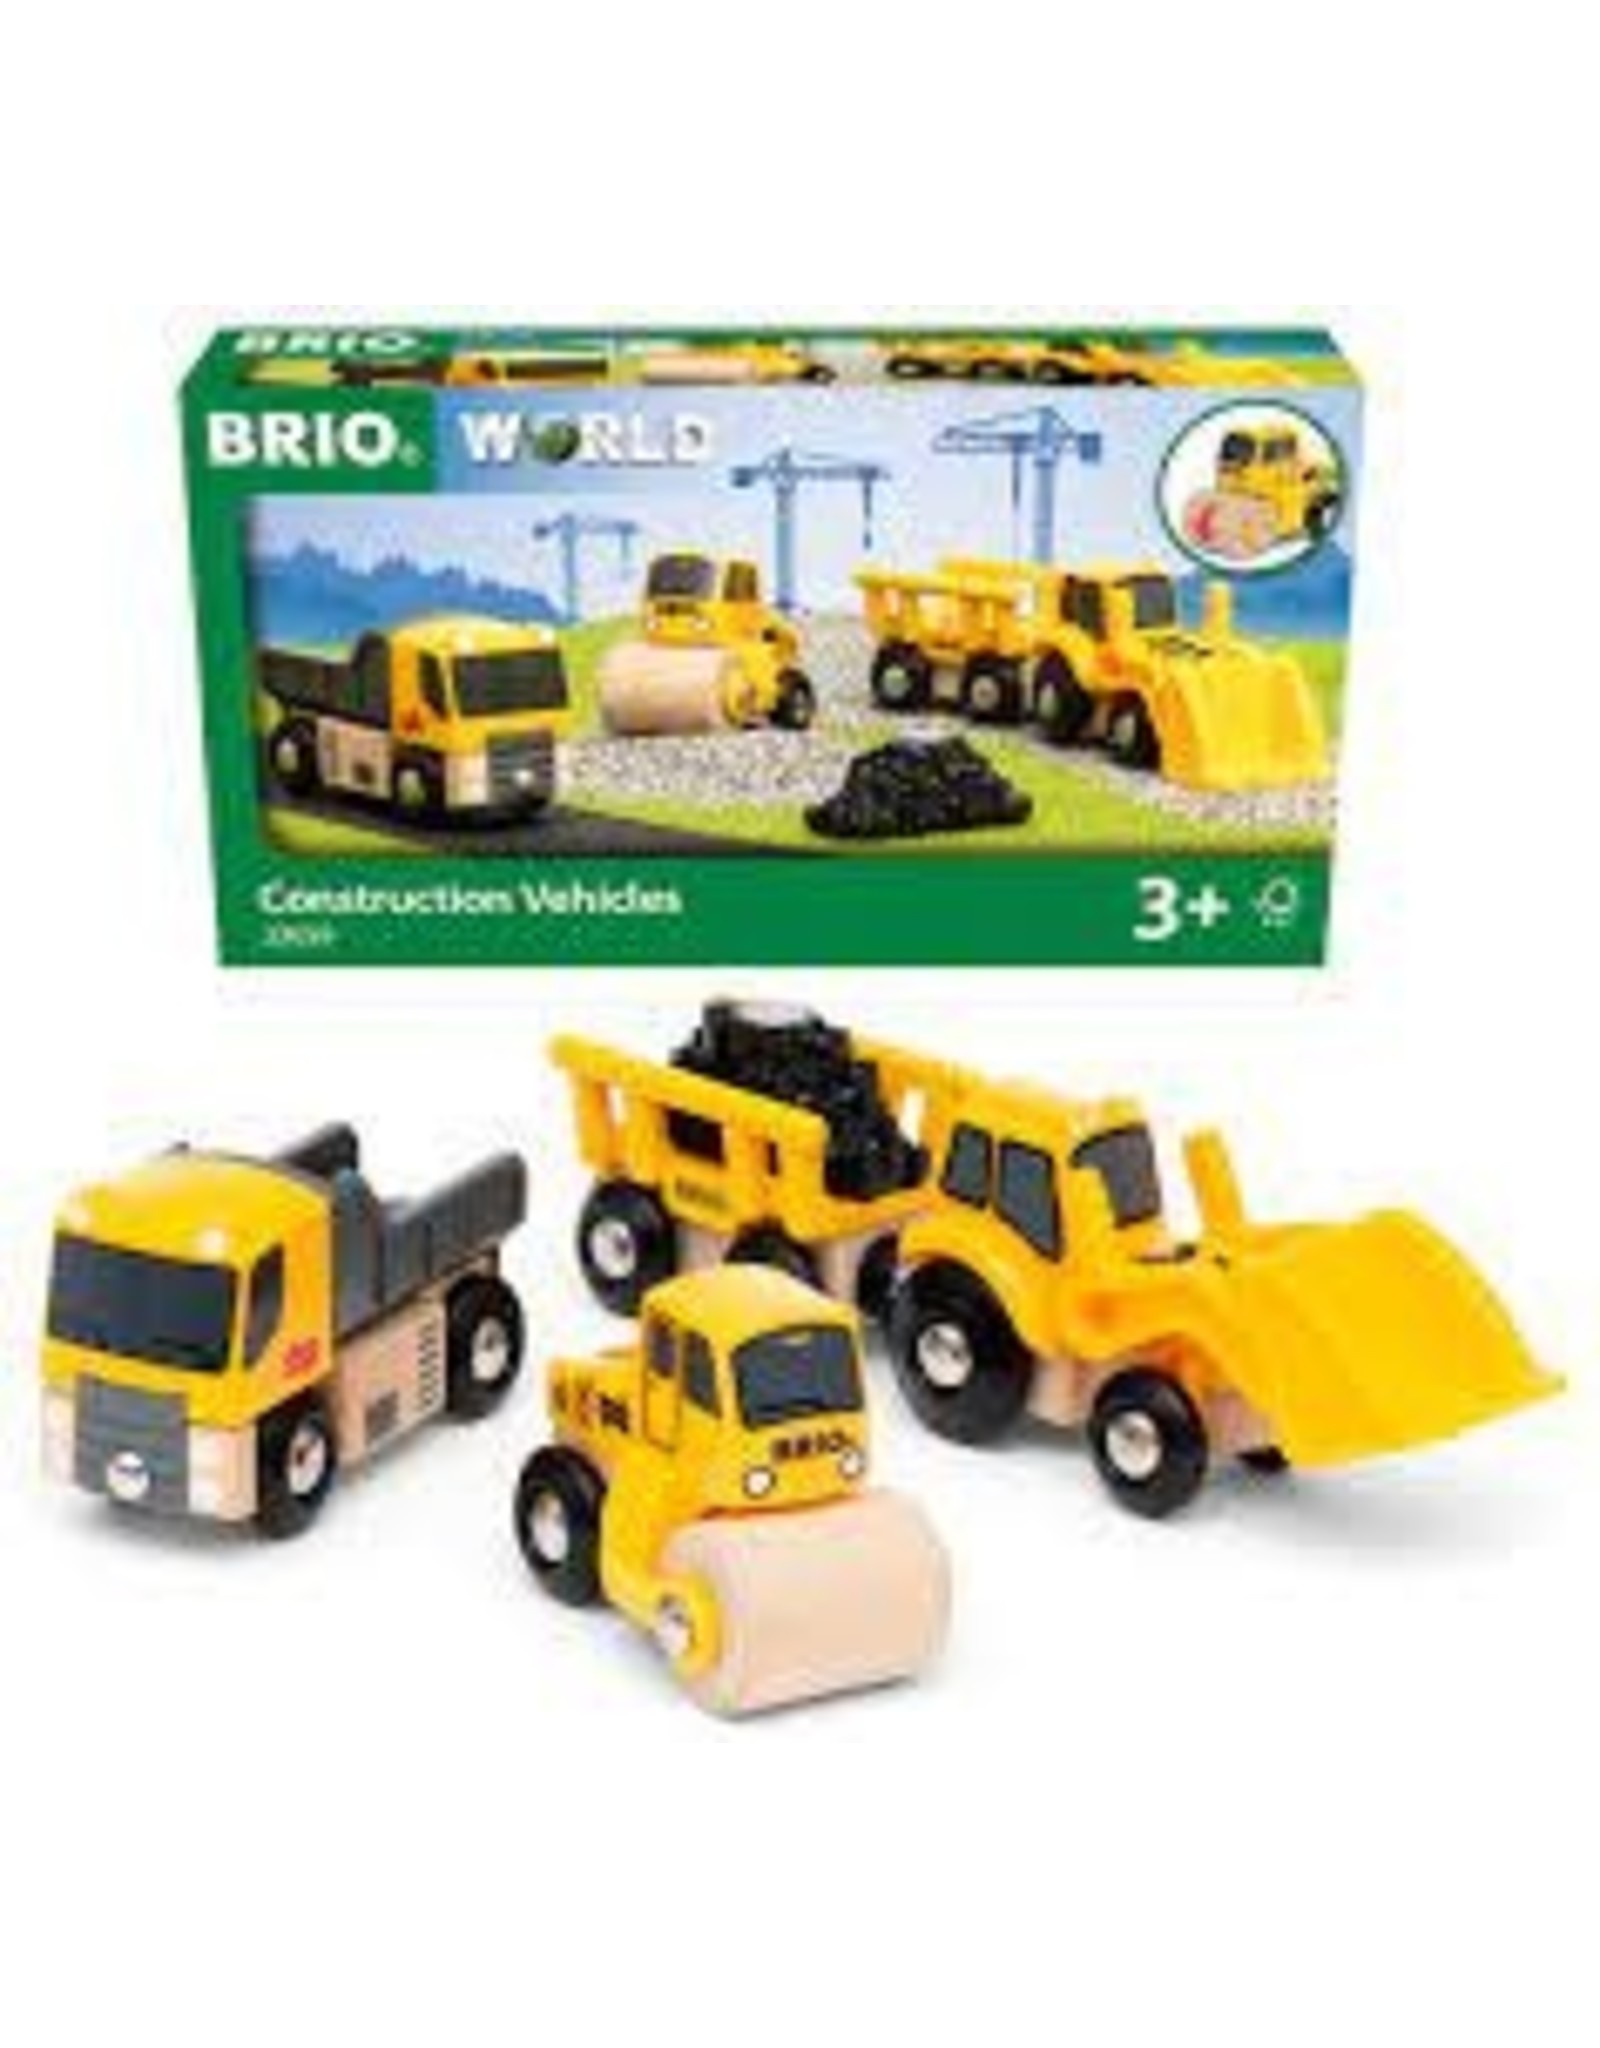 BRIO CORP Construction Vehicles